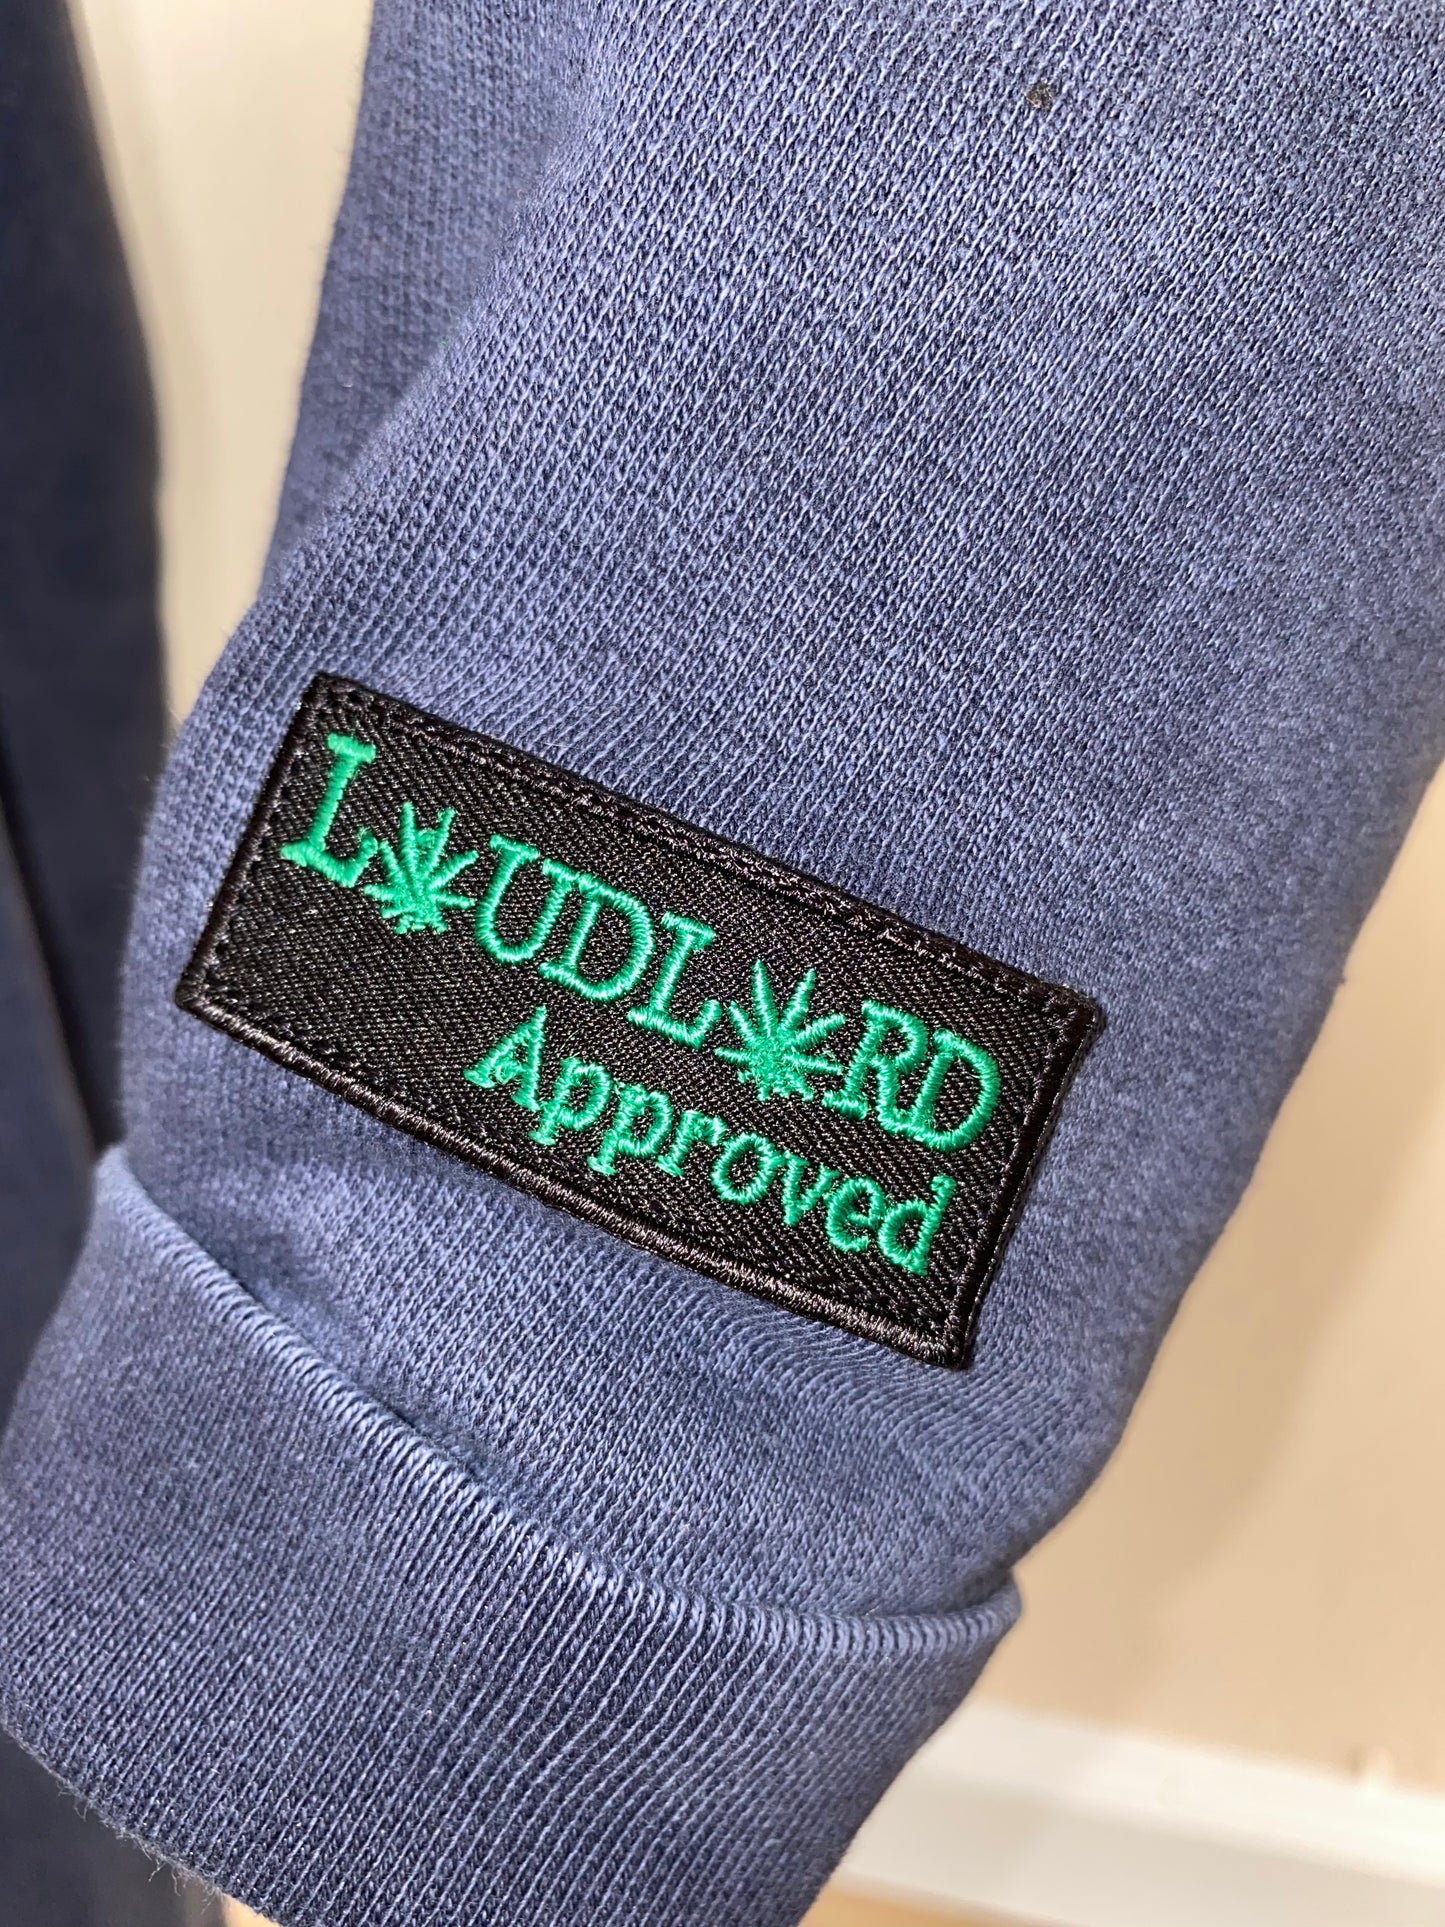 Loud Alien Apparel “Classic” Logo Hoodie